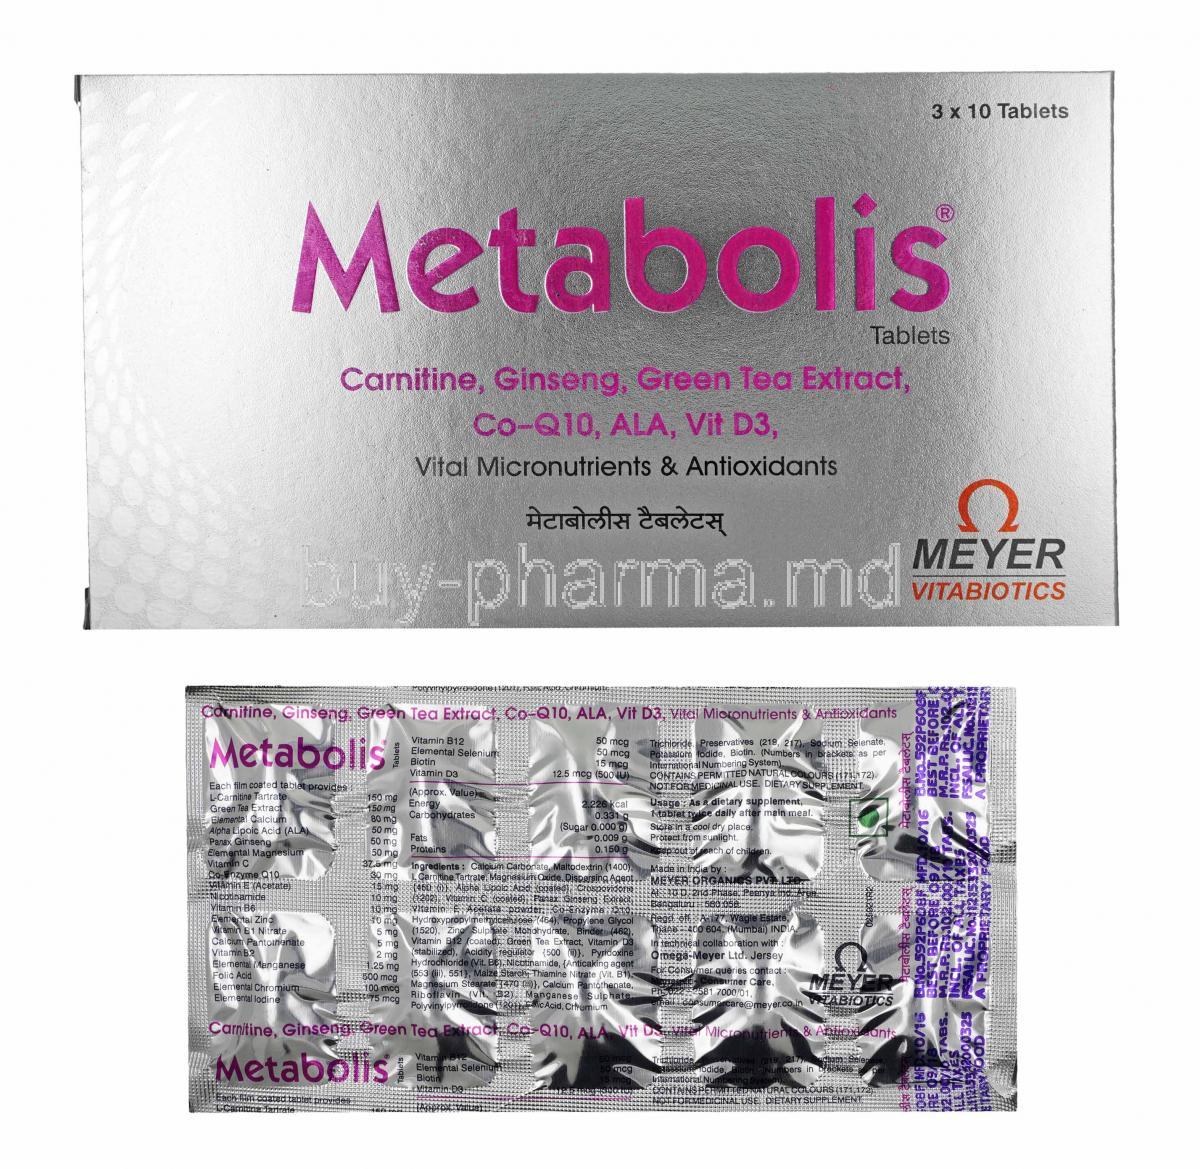 Metabolis, box and tablets